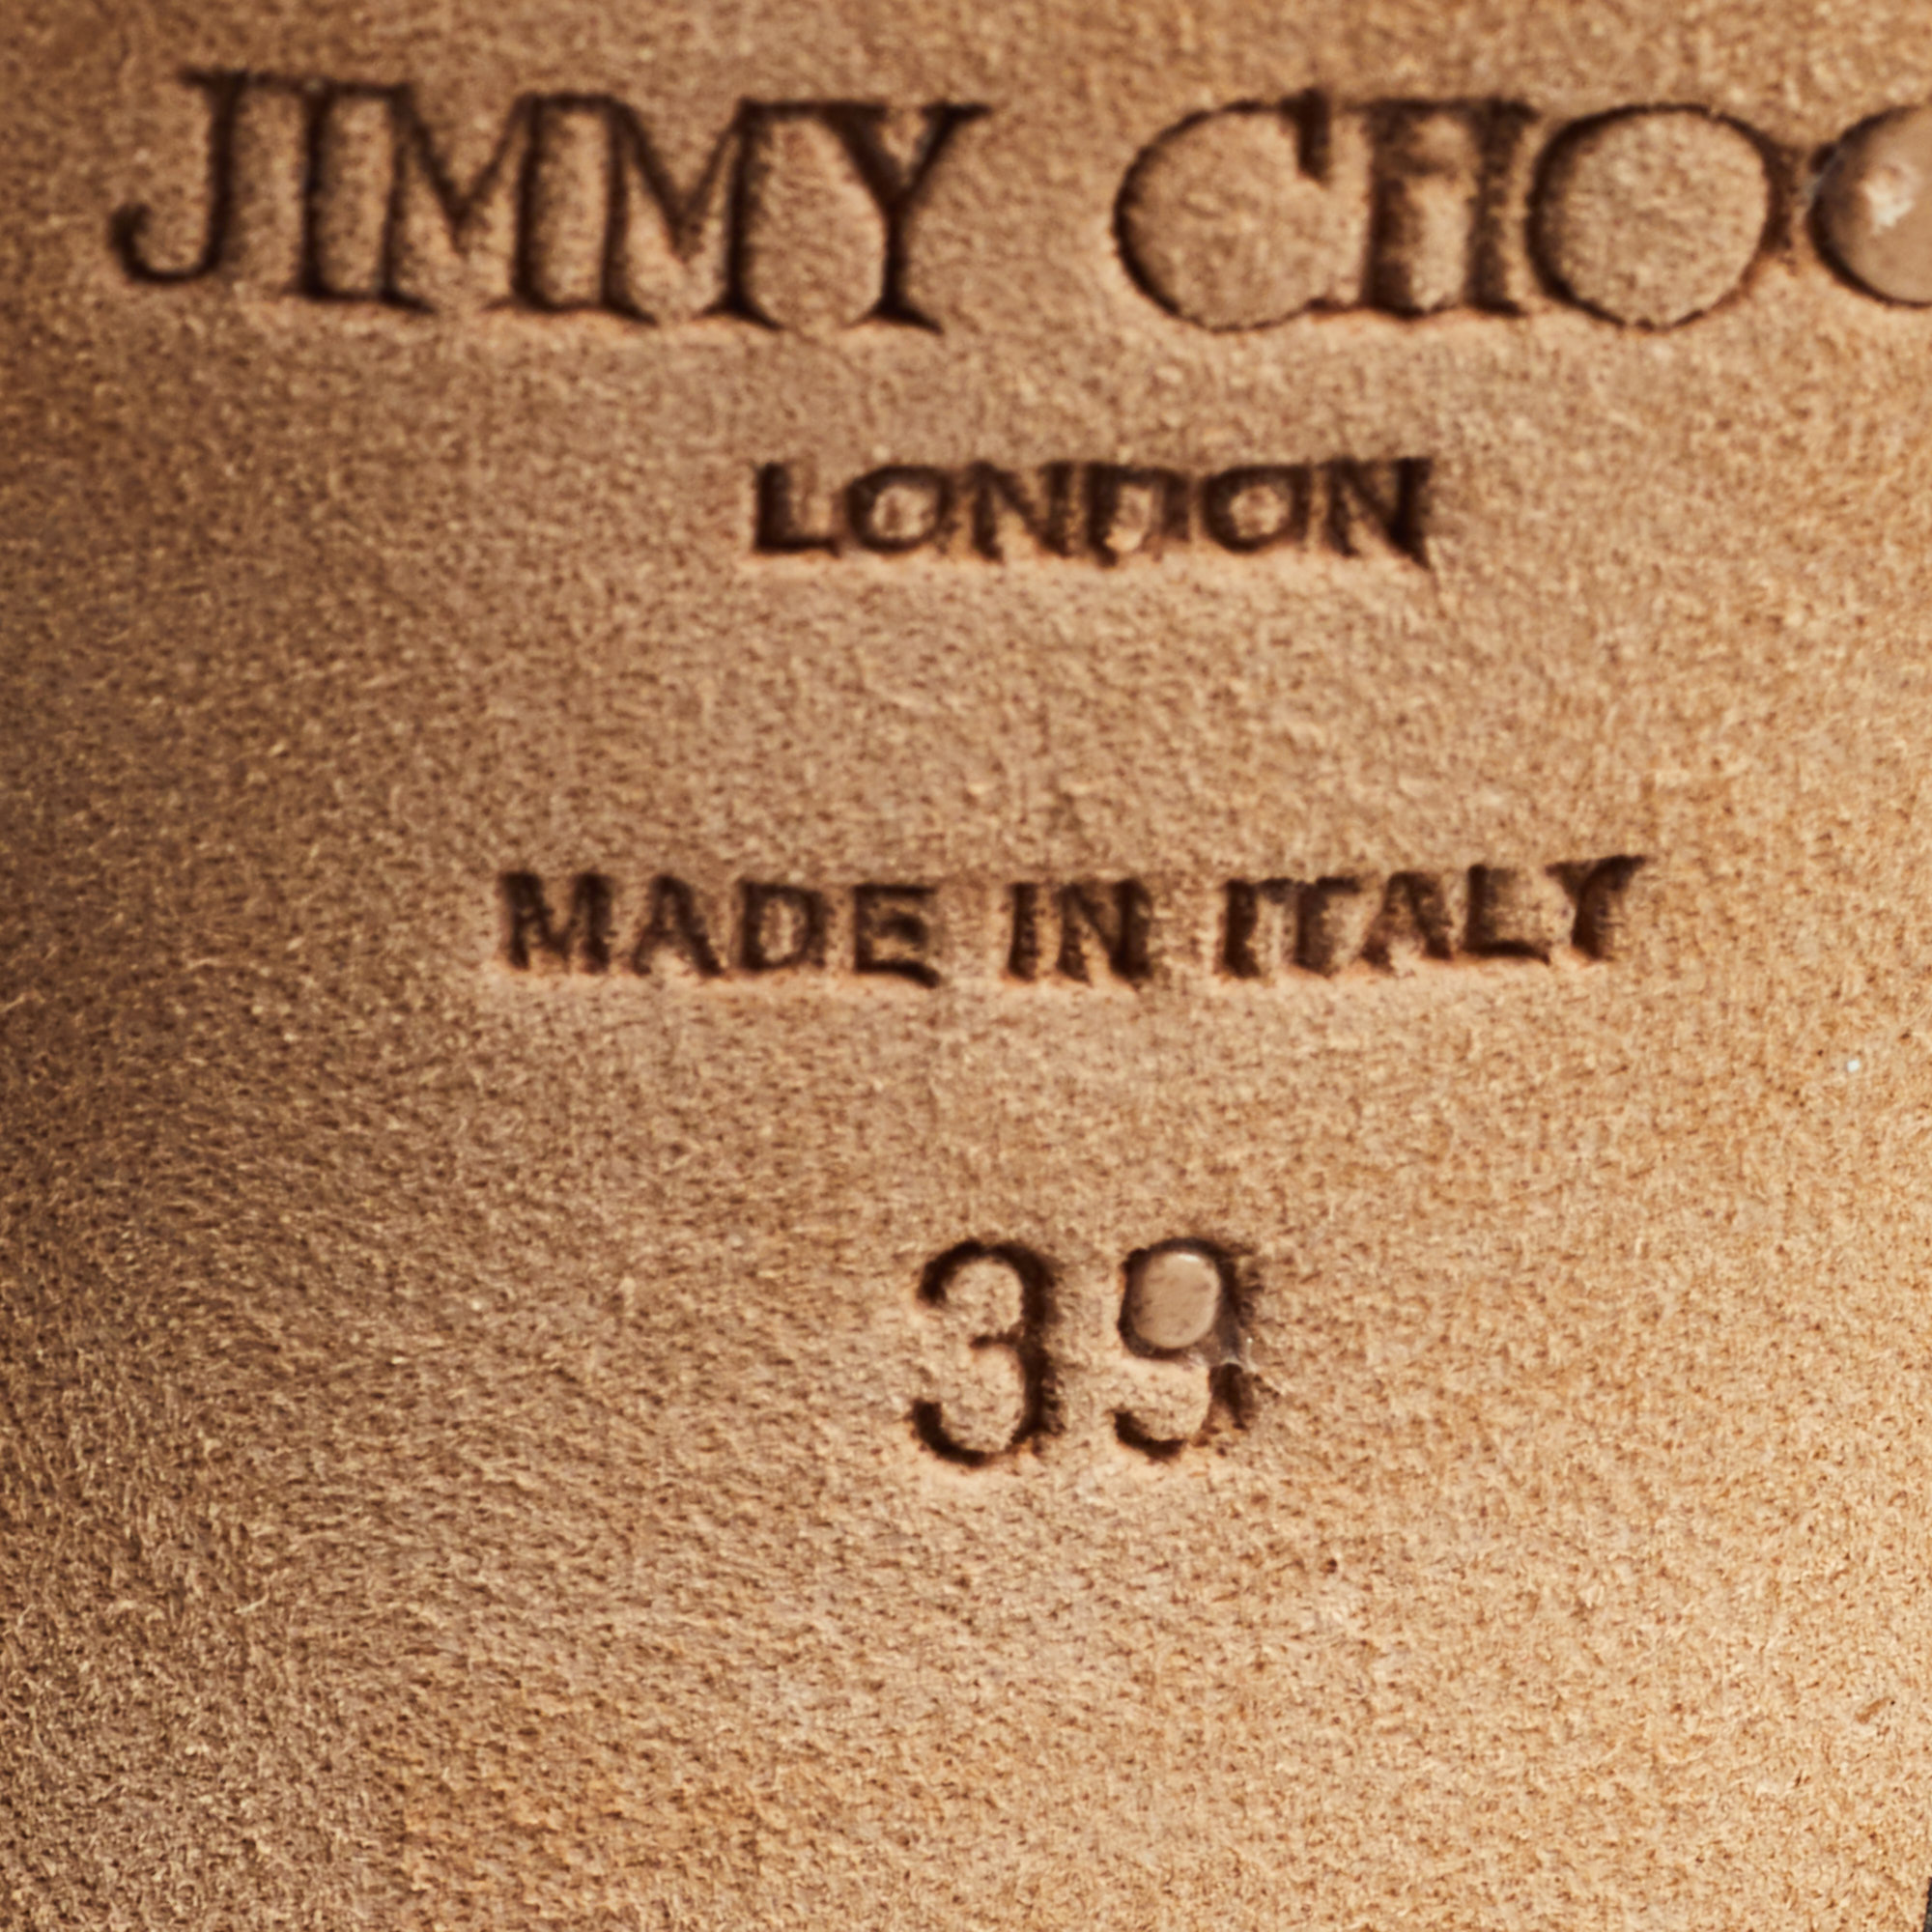 Jimmy Choo Black Patent Leather Vamp Platform Sandals Size 39